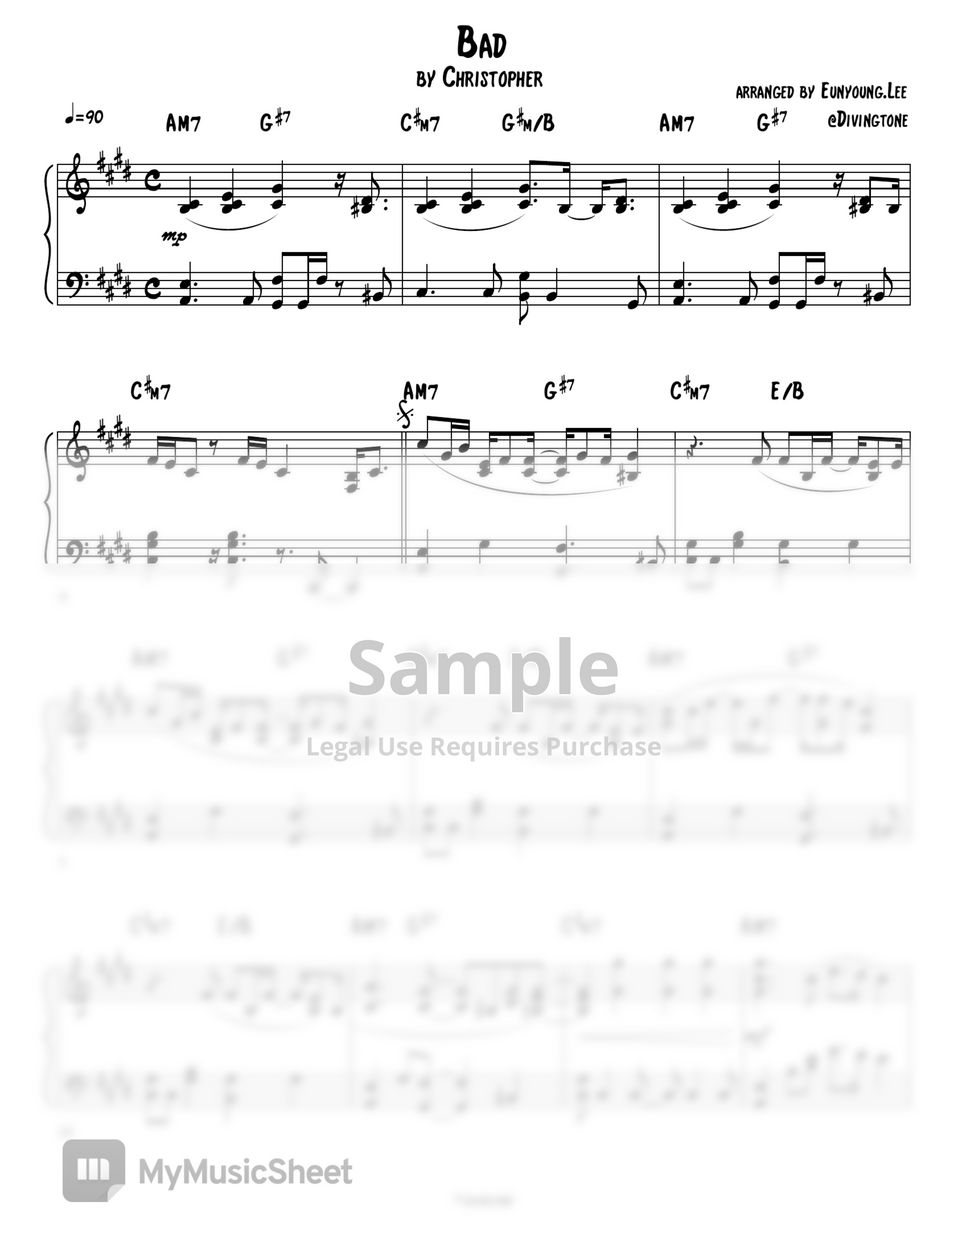 Christopher/크리스토퍼 - Bad (piano sheet/피아노 악보) by Divingtone